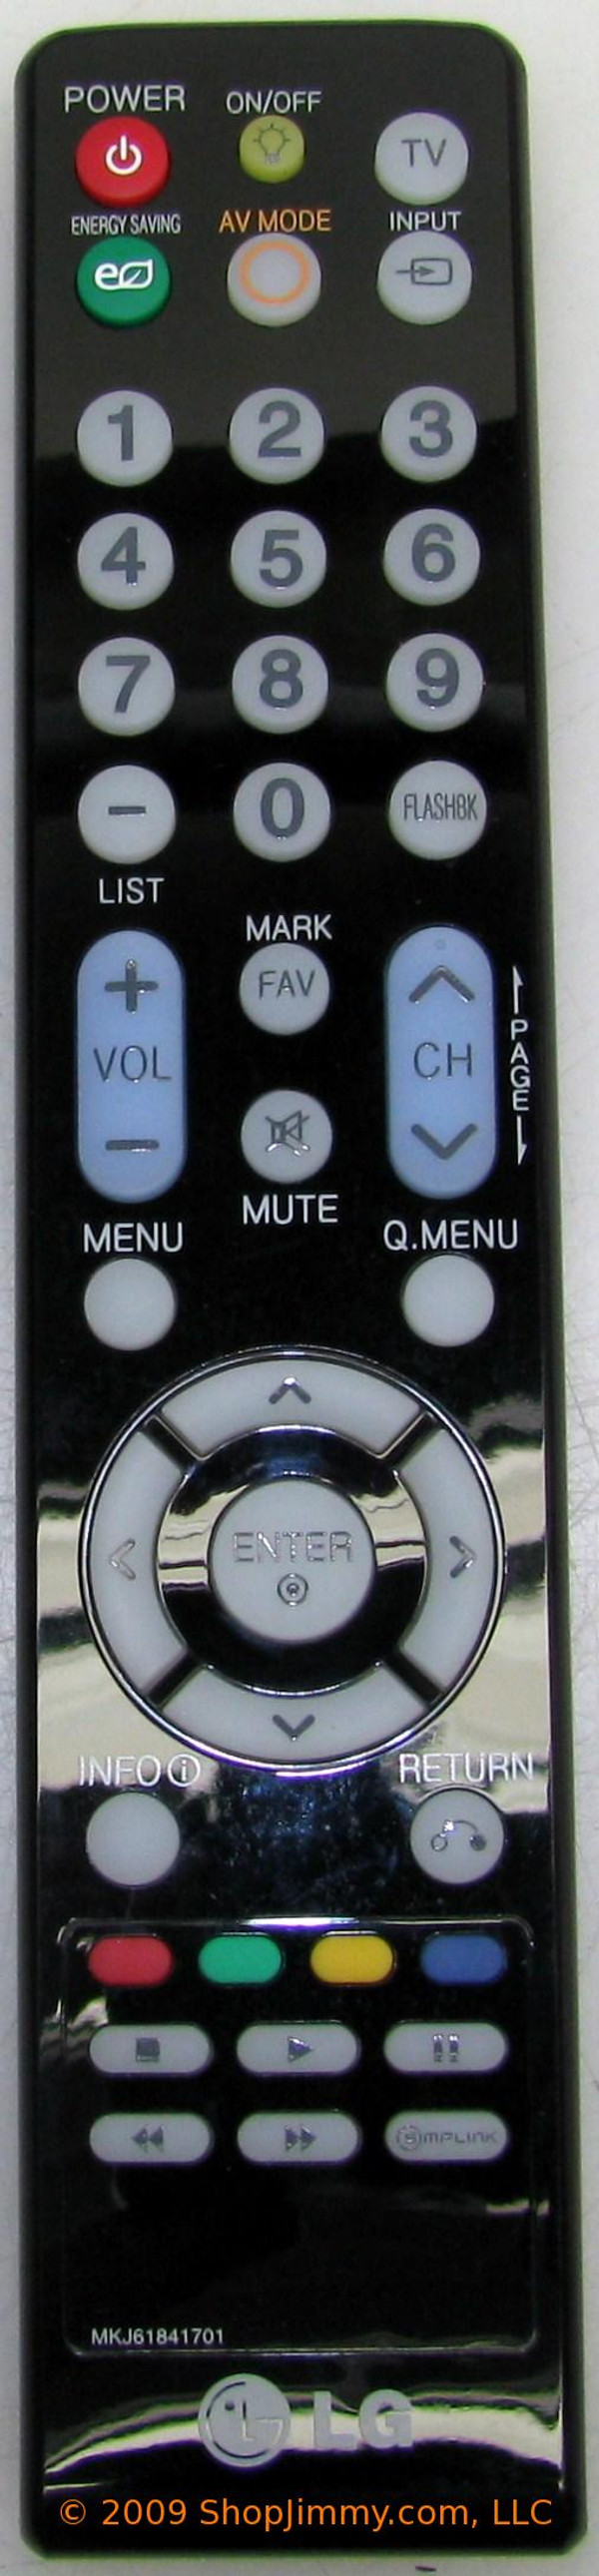 LG MKJ61841701 Remote Control